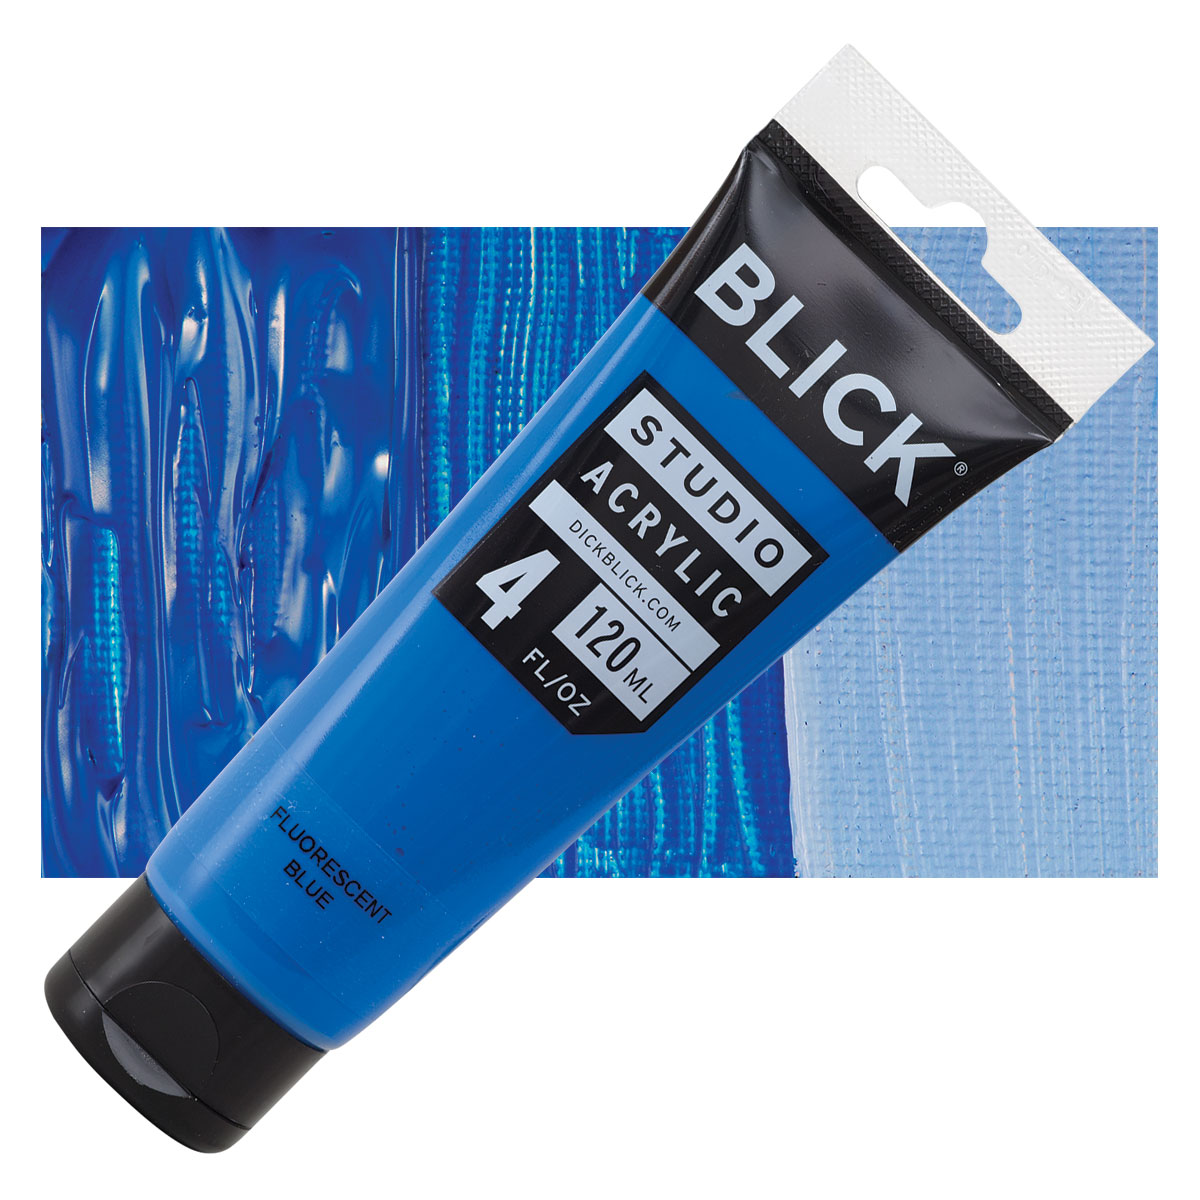 Blick Studio Acrylics - Flourescent Pink, 4 oz Tube